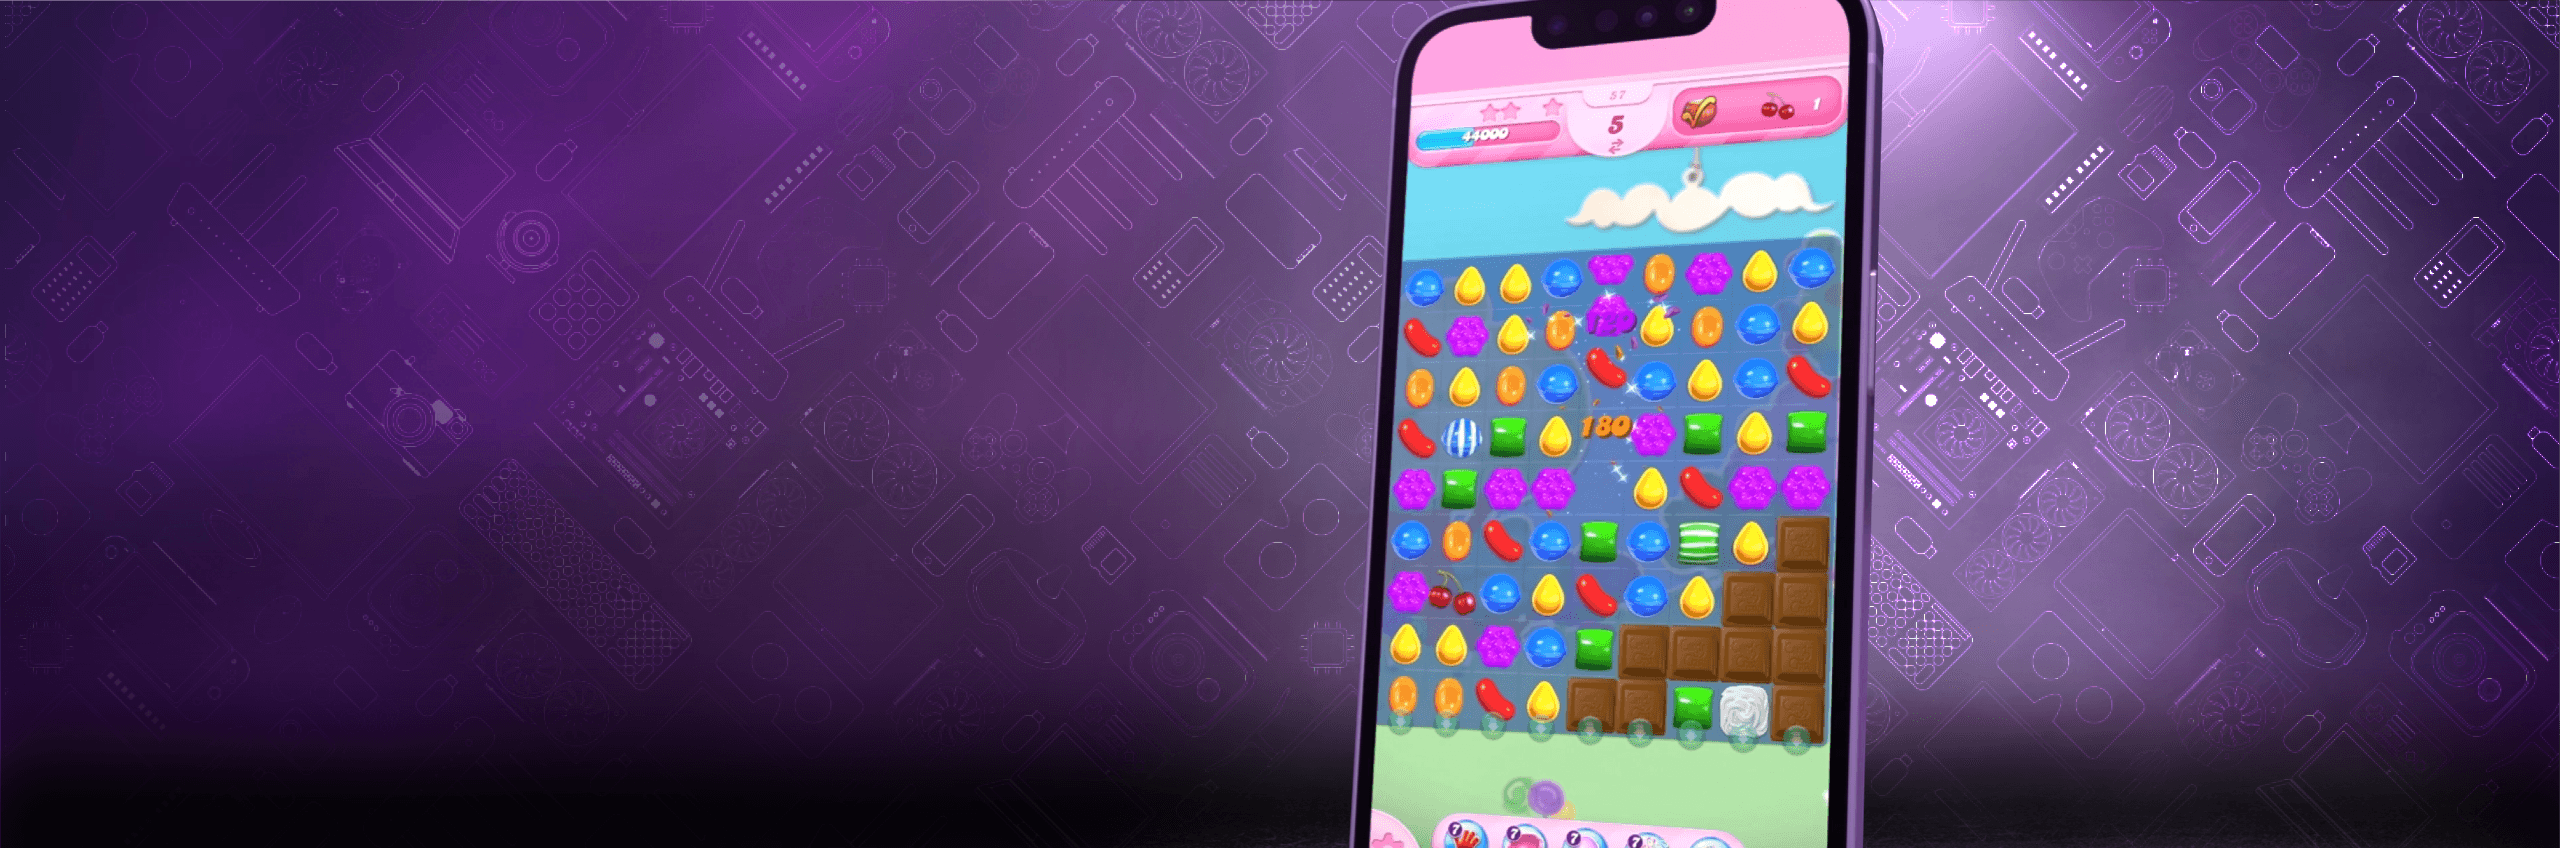 Could Candy Crush Saga be a gateway to gambling?